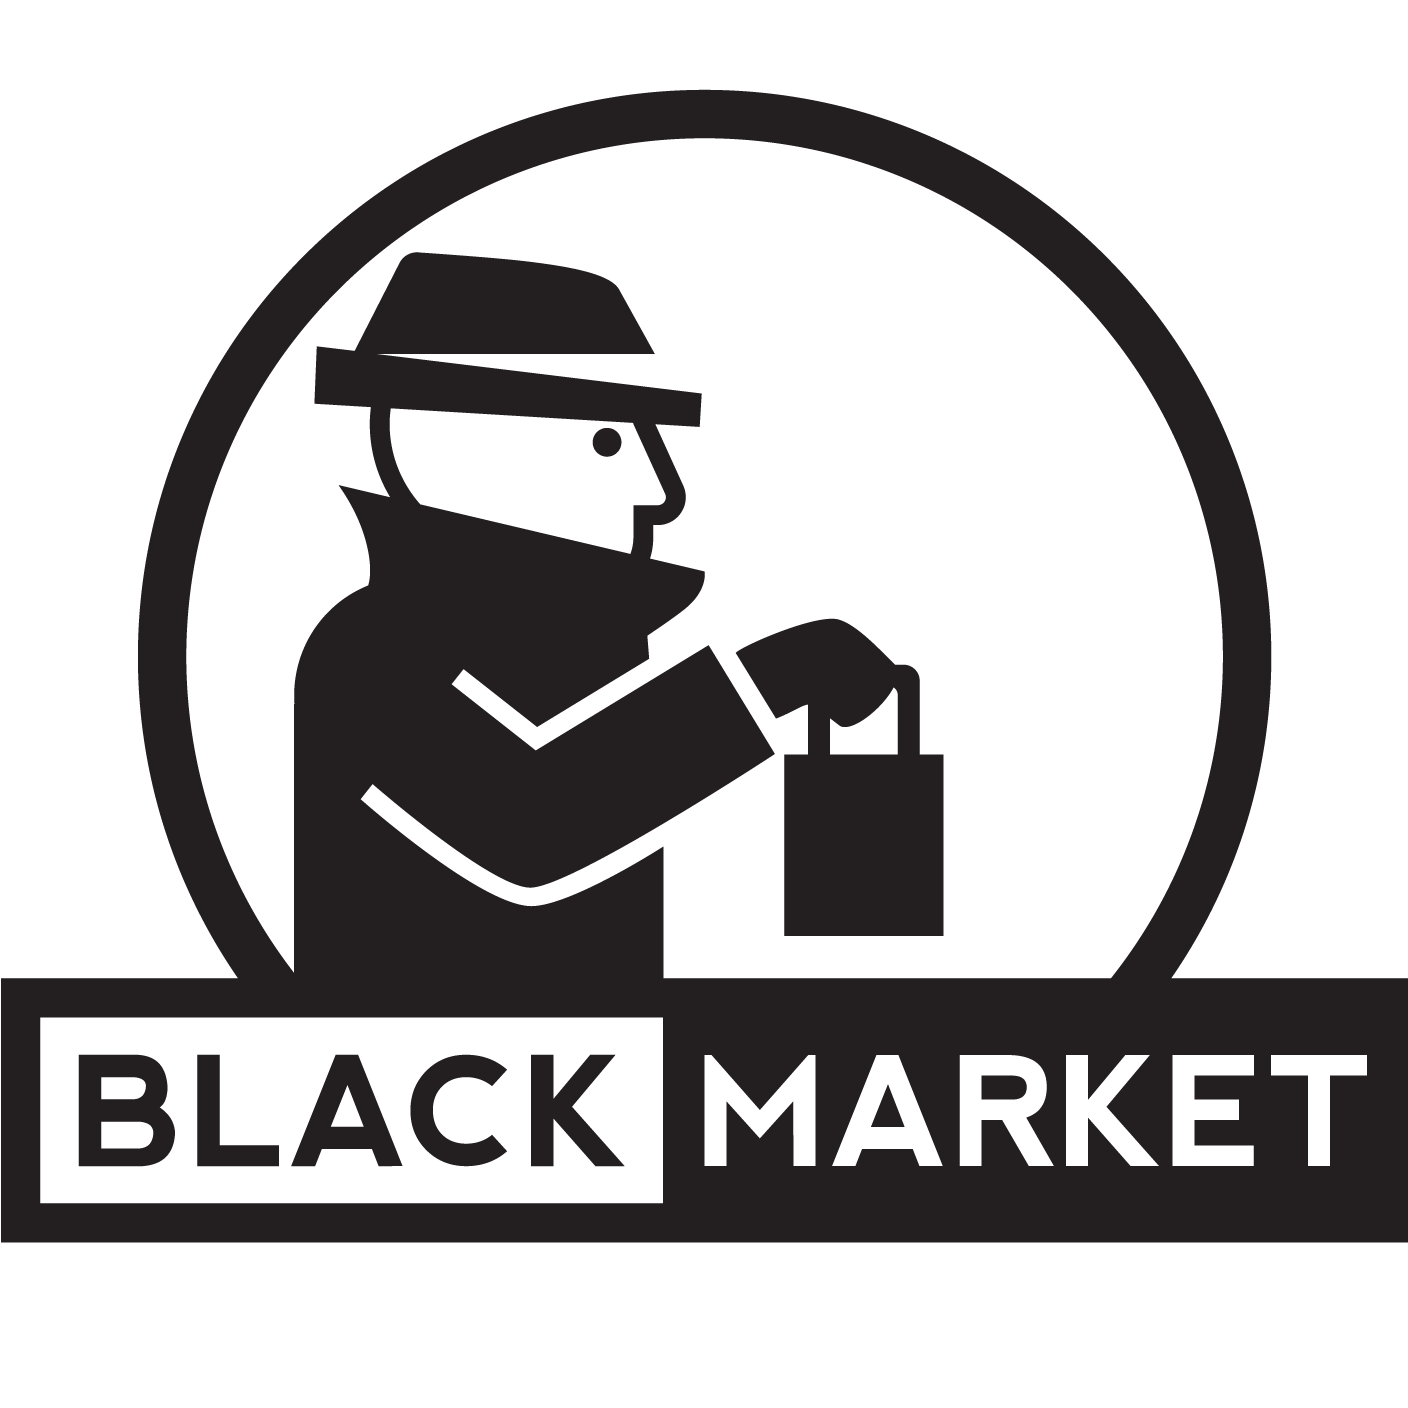 market clipart black and white